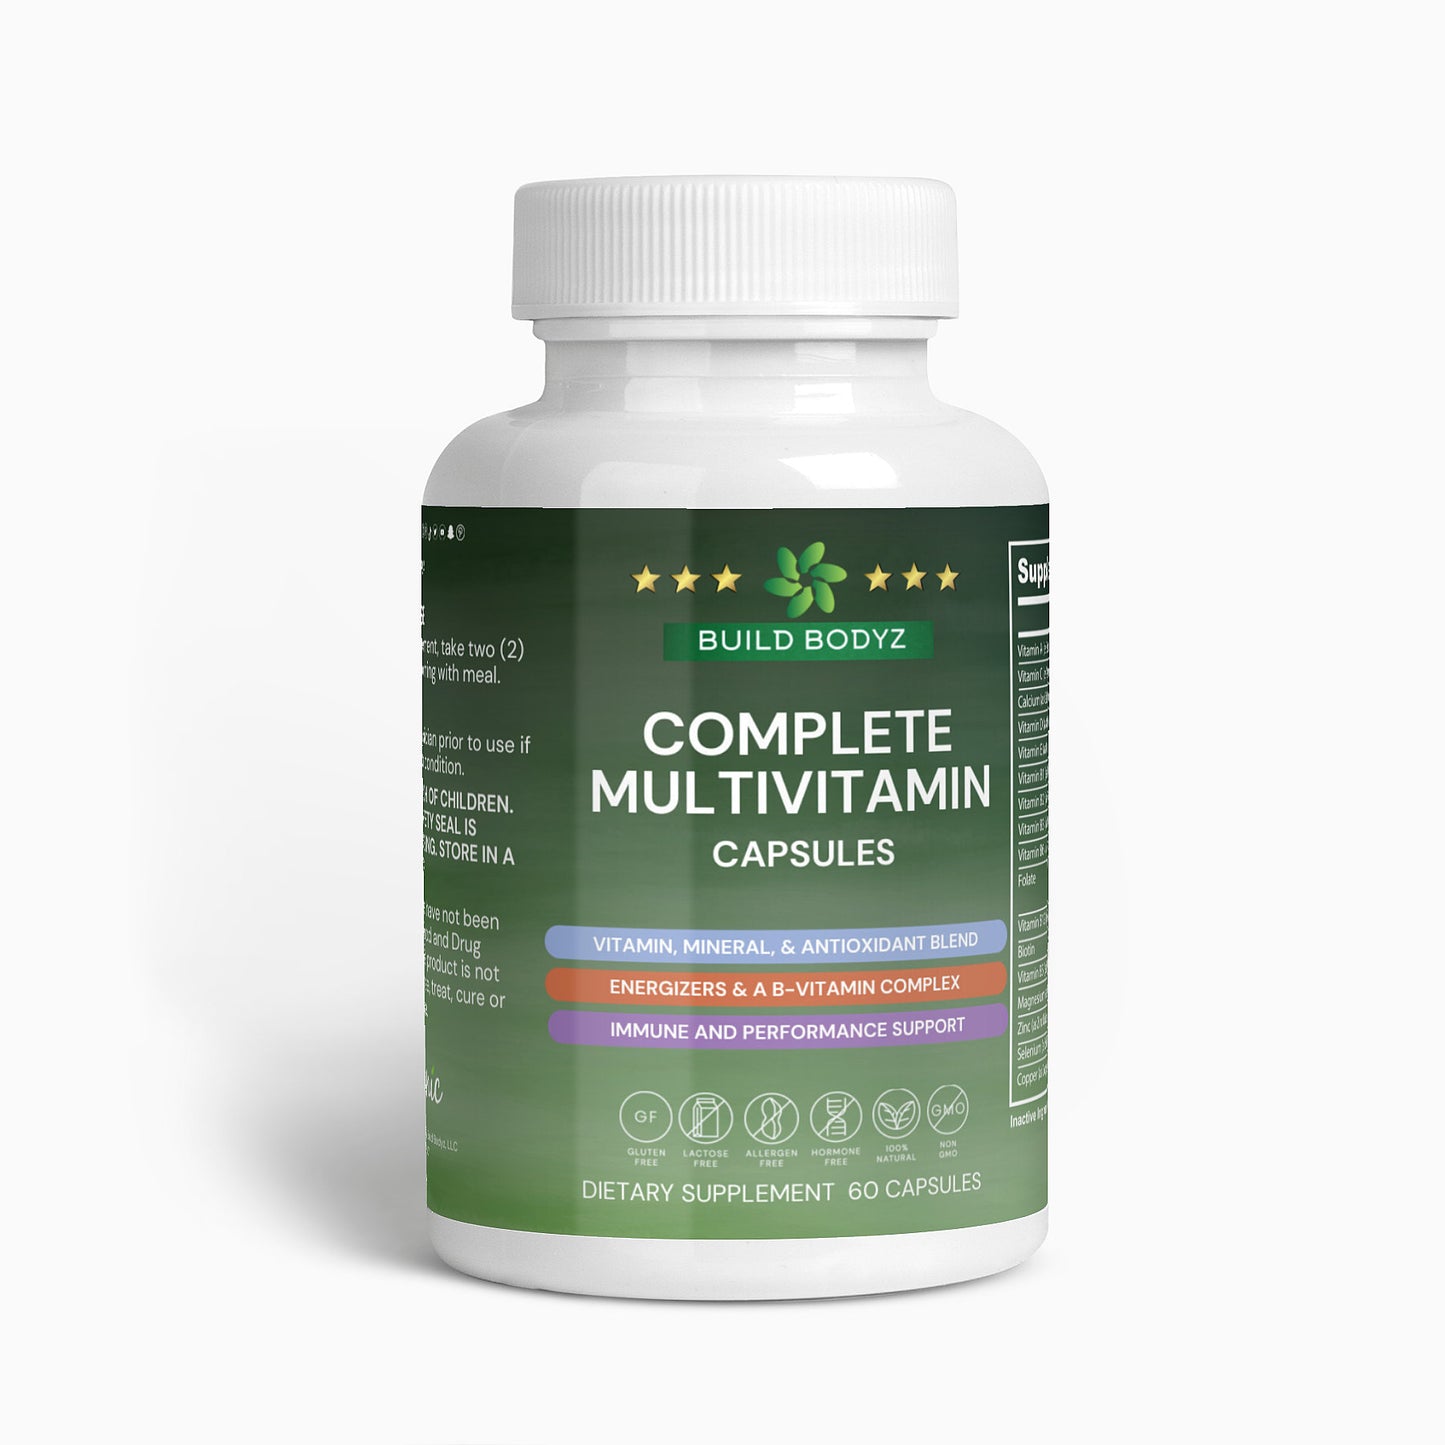 Complete Multivitamin with Immune Support and Antioxidants - 60 Capsules, Gluten-Free, Non-GMO